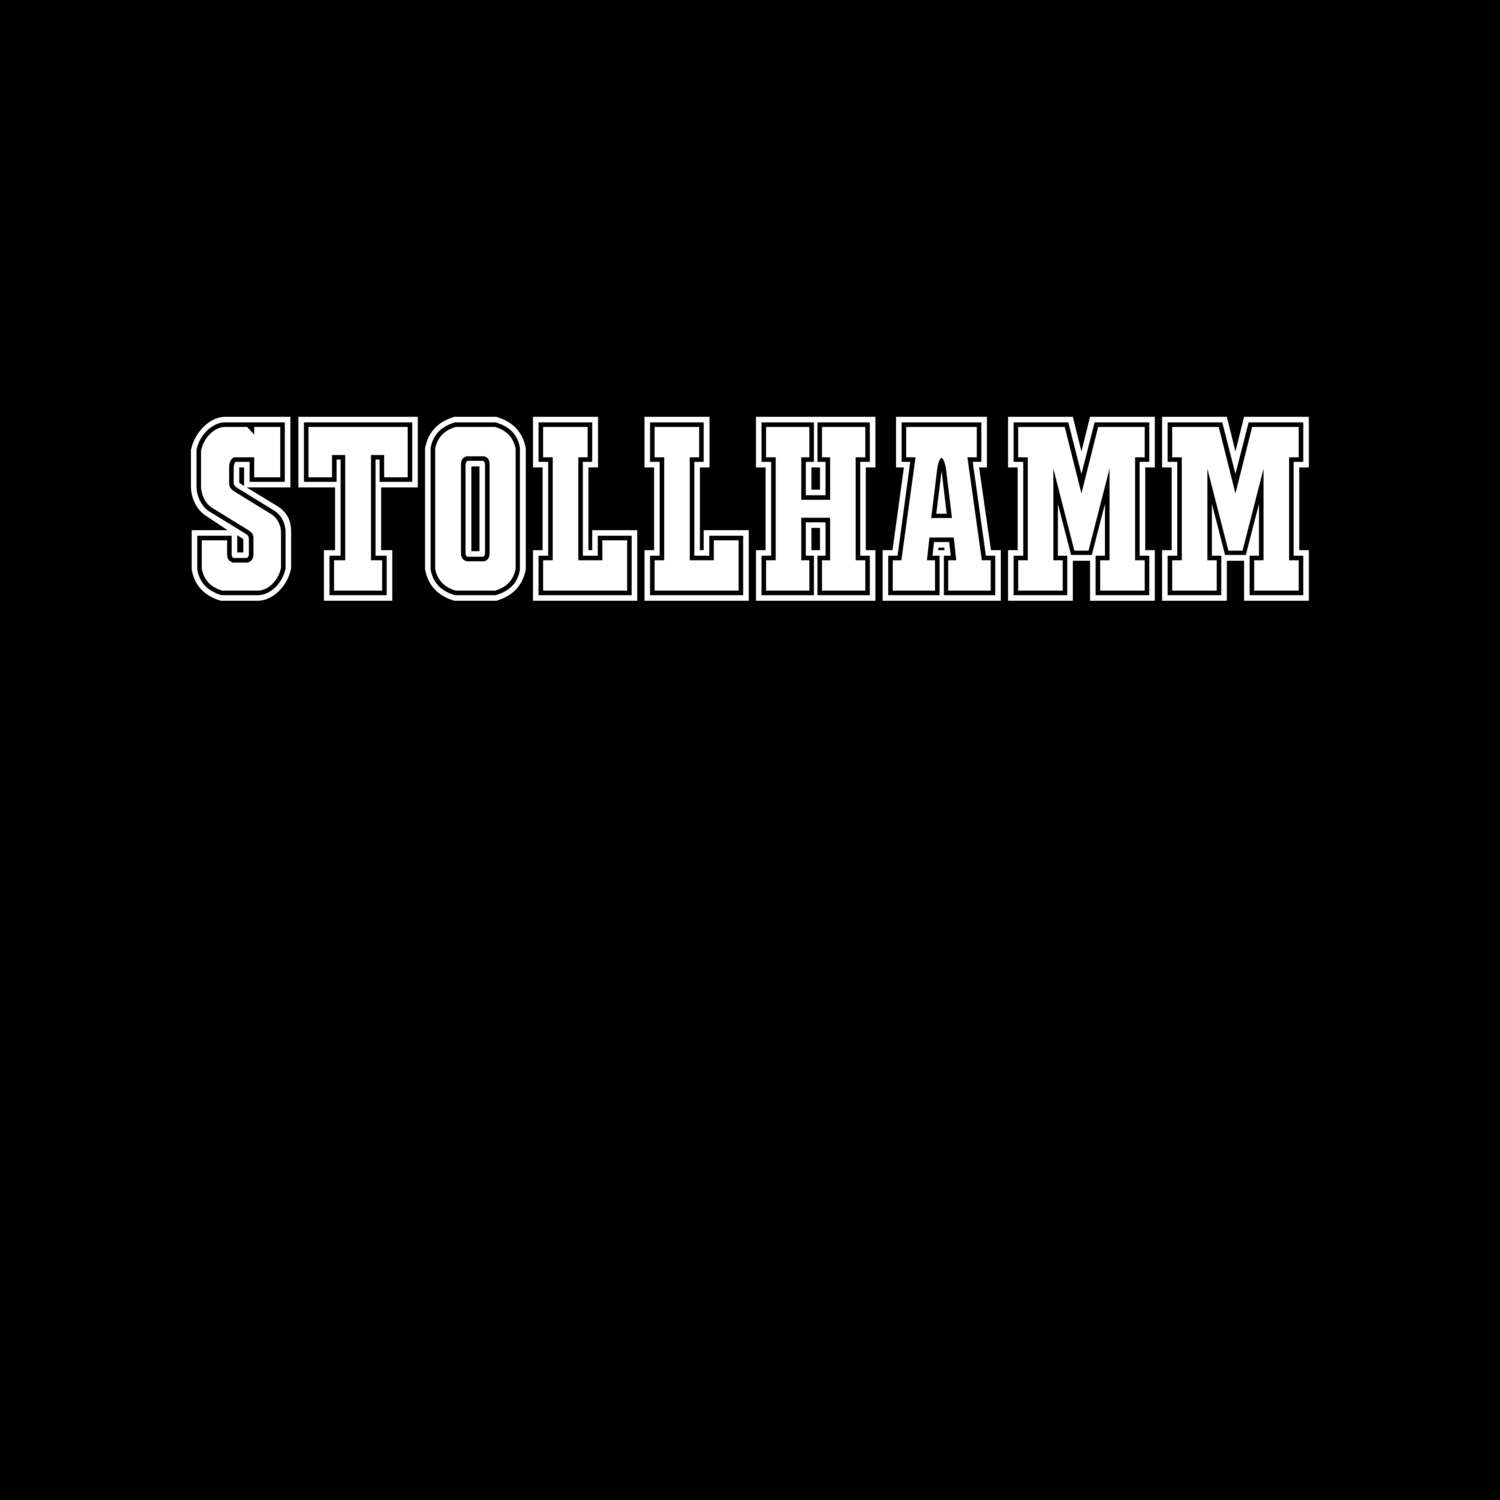 Stollhamm T-Shirt »Classic«